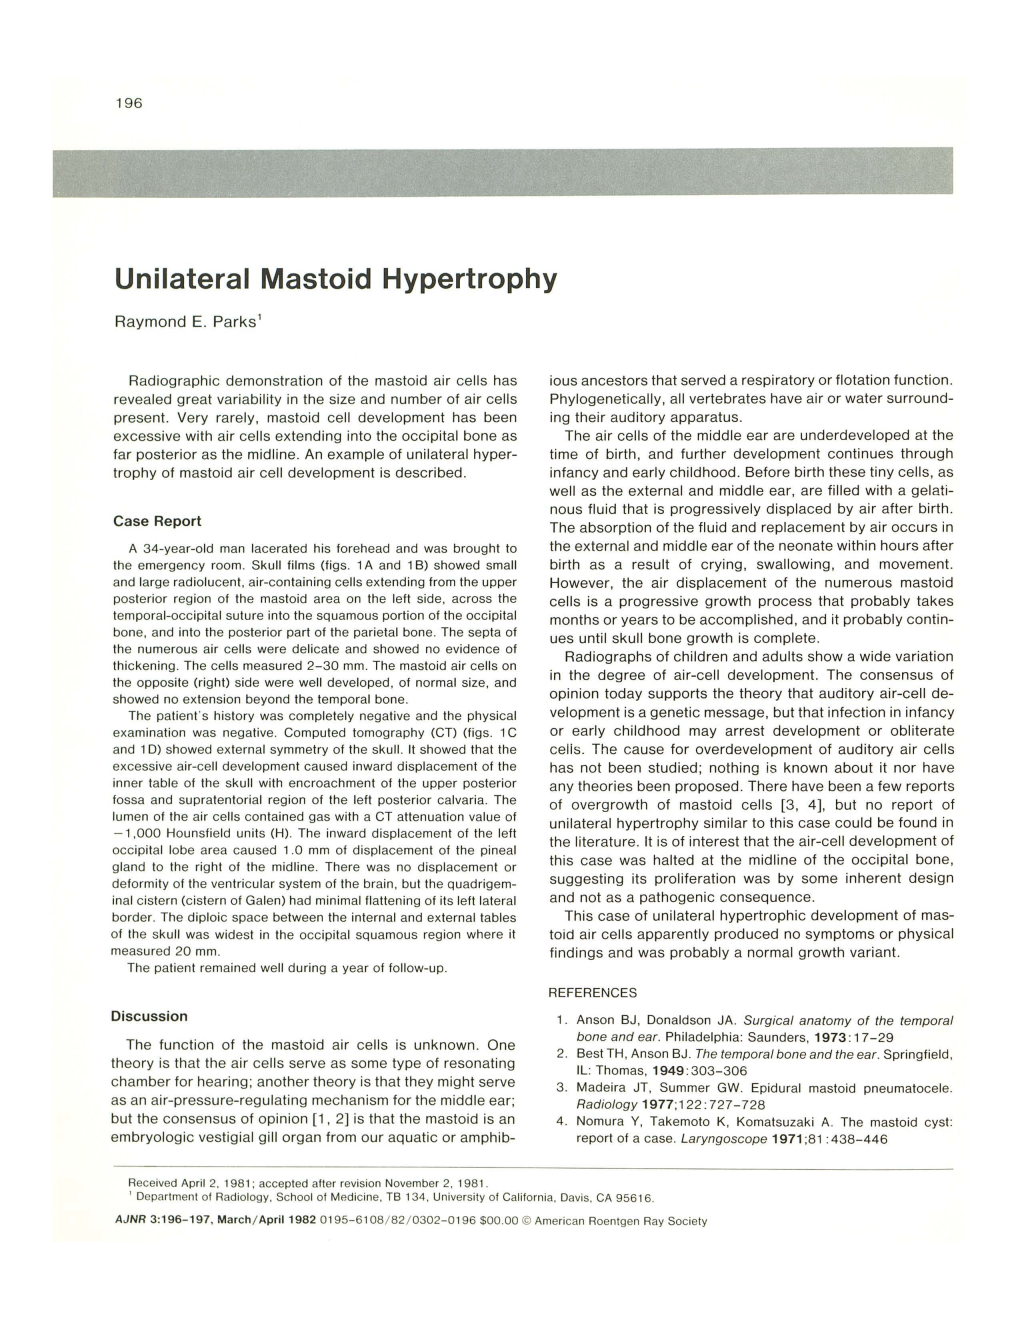 Unilateral Mastoid Hypertrophy